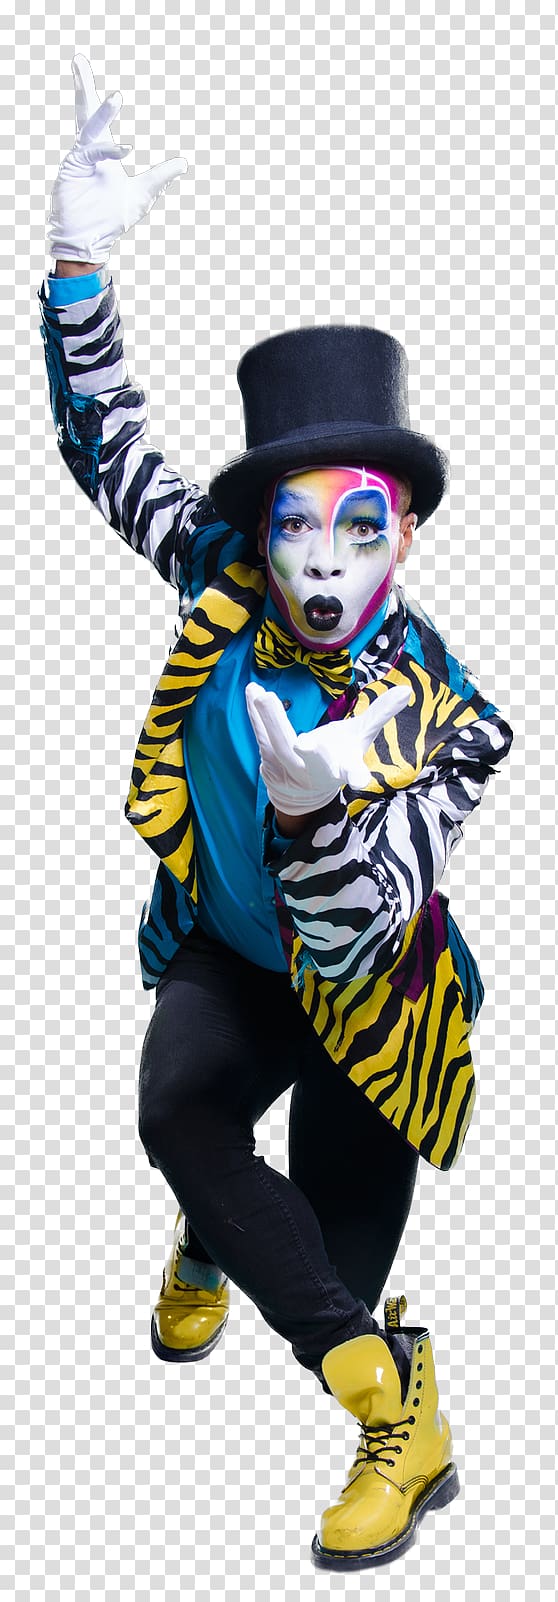 Clown Headgear Mascot Costume, clown transparent background PNG clipart